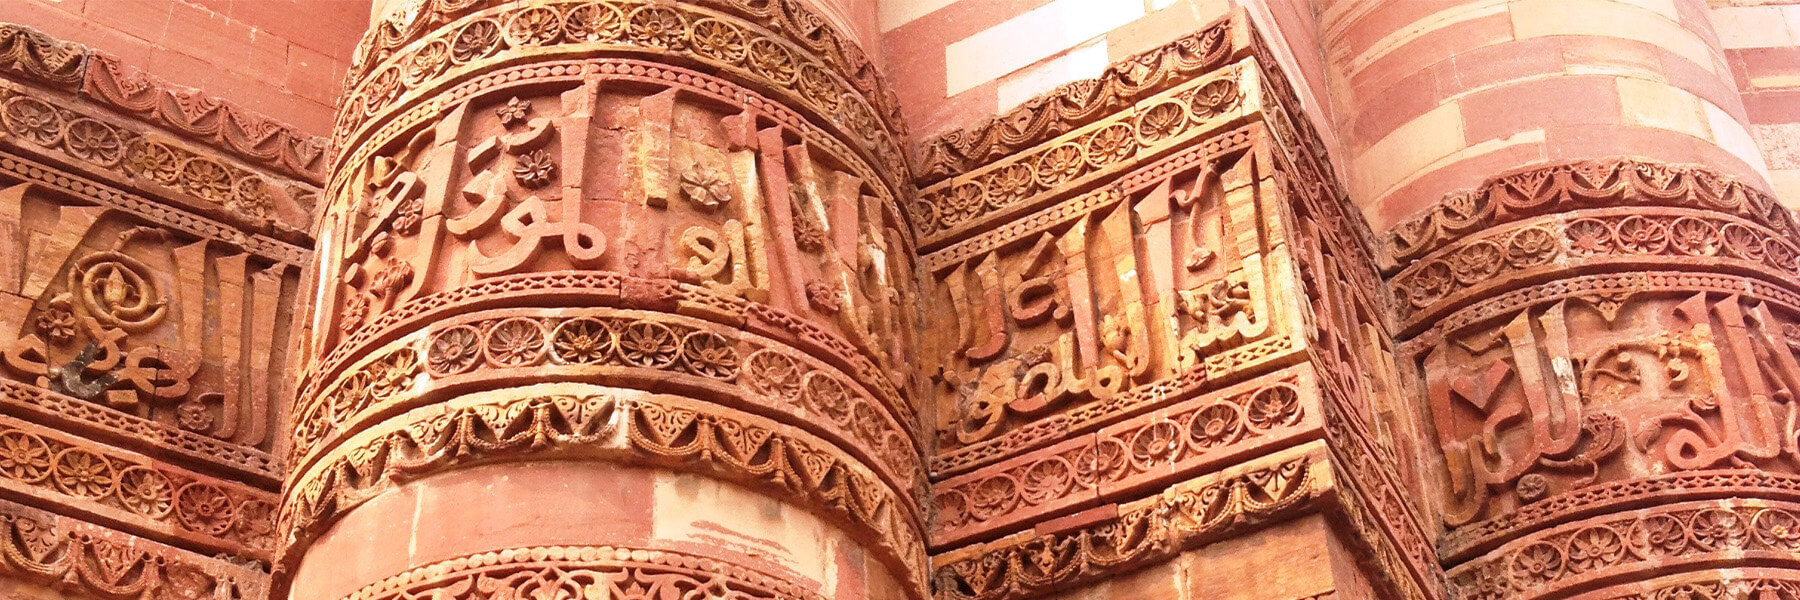 Stone carvings of Qutb Minar in Delhi, India